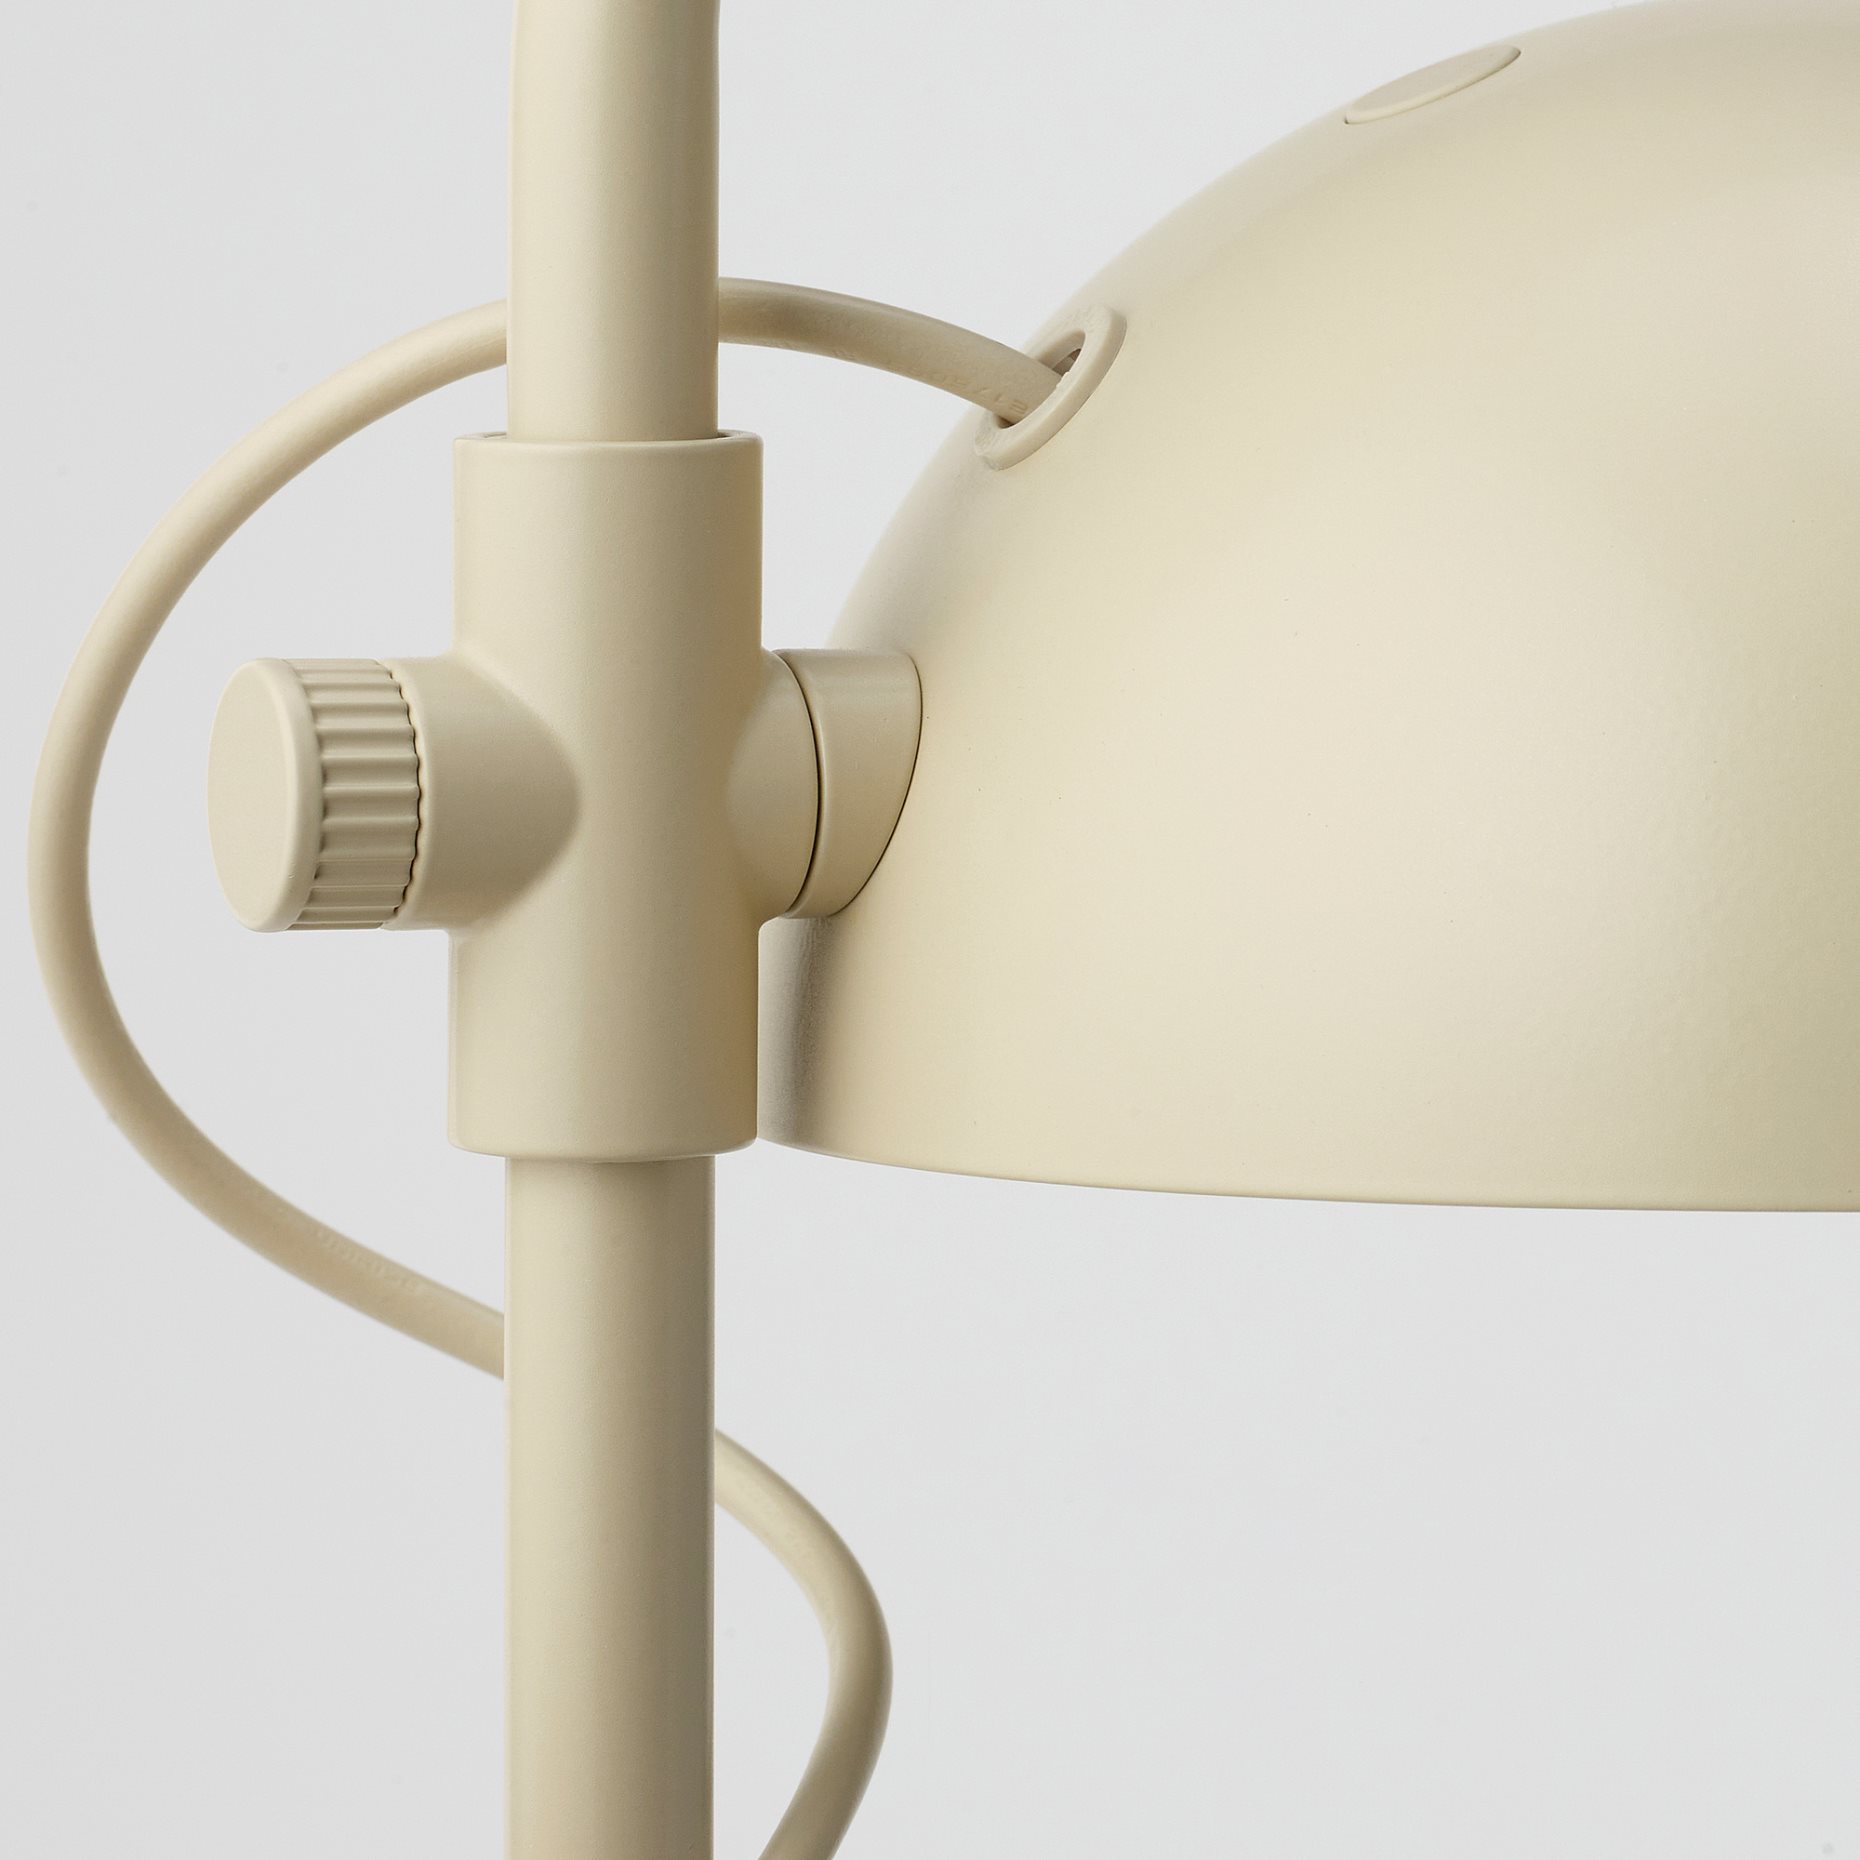 SOMMARLÅNKE, floor lamp with built-in LED light source/outdoor, 100 cm, 705.443.24